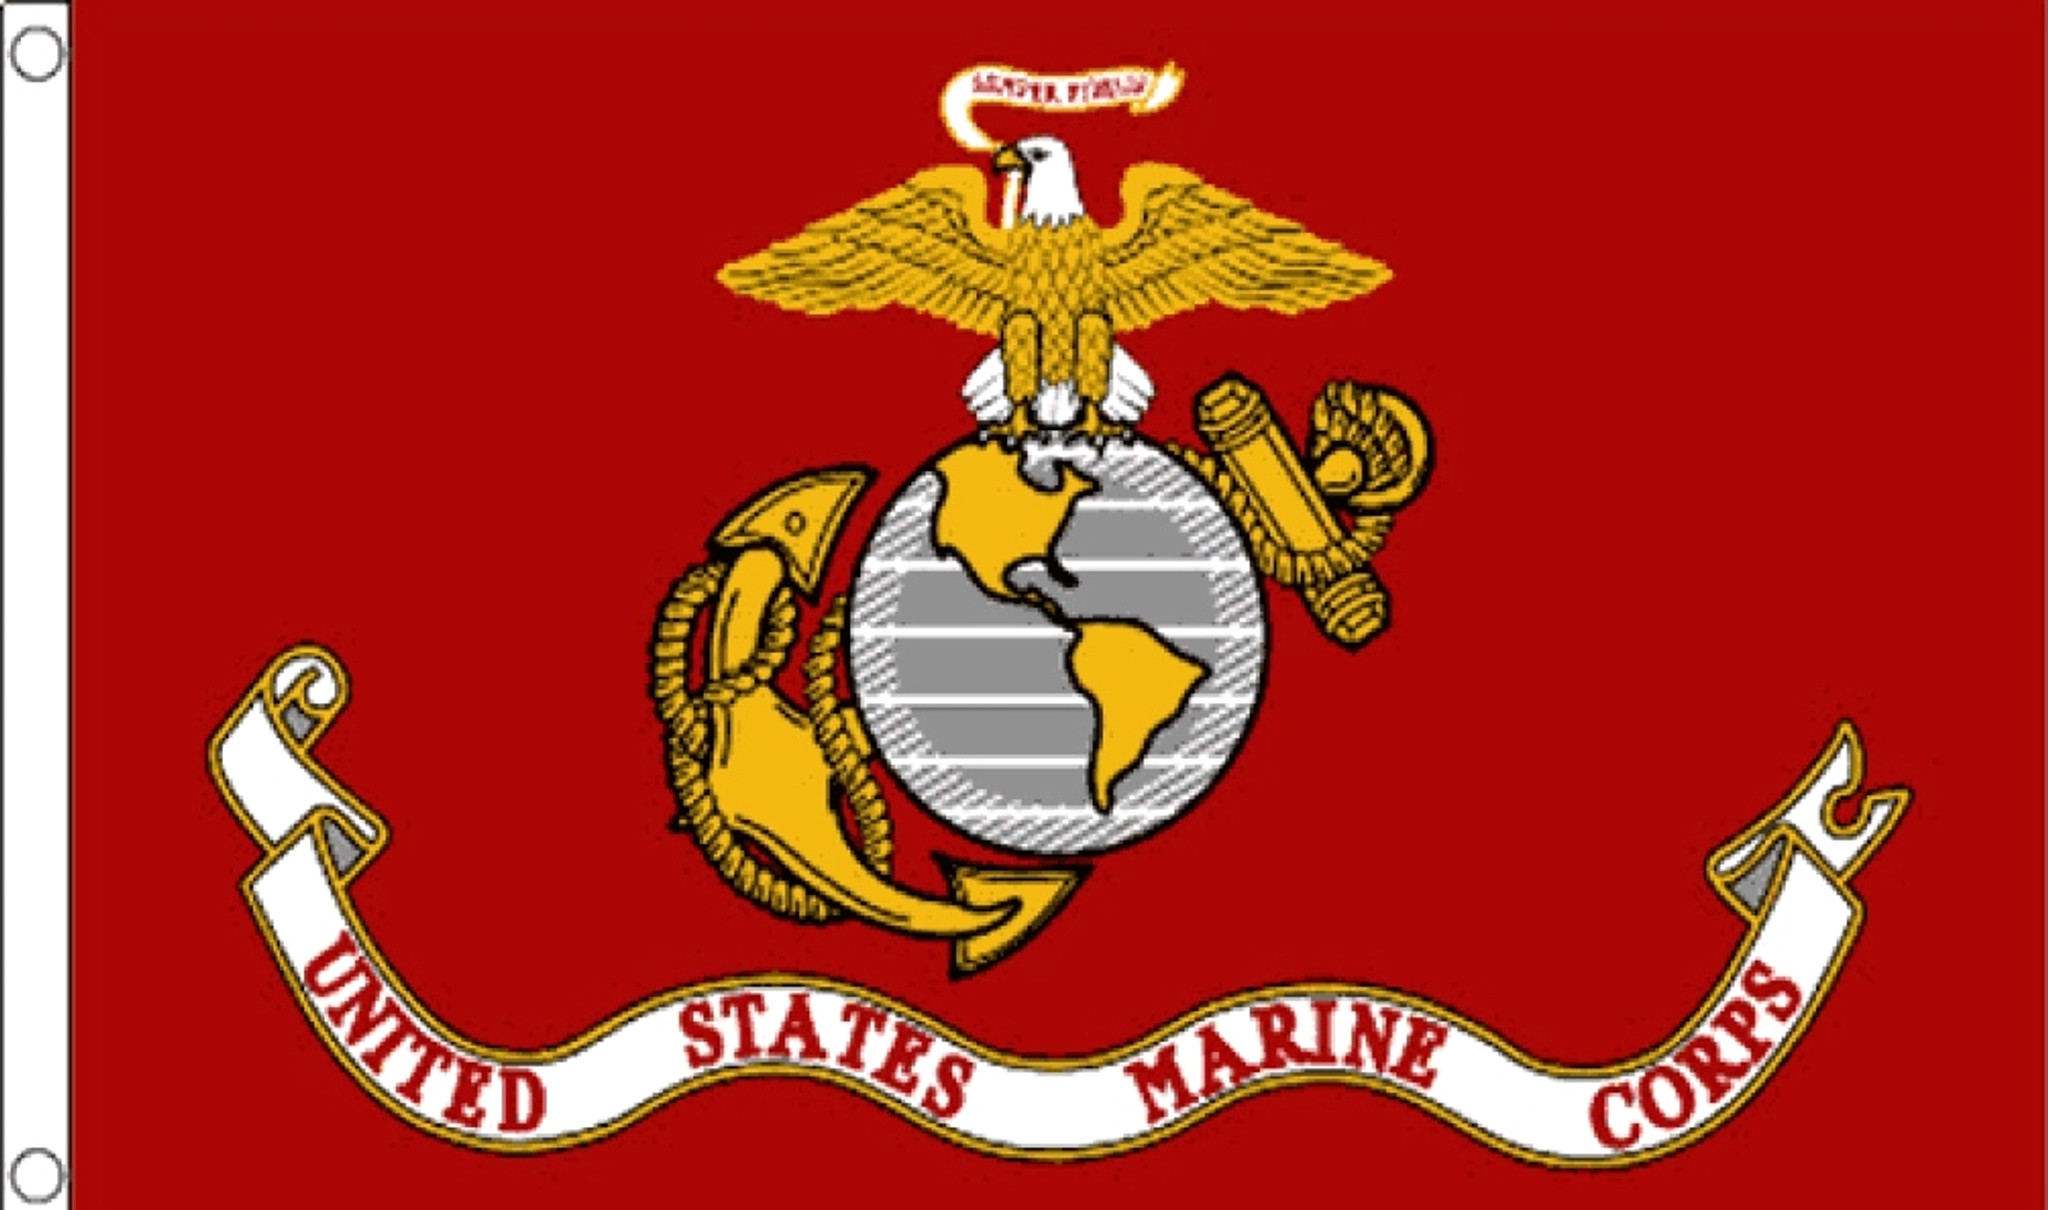 Marine Corps Battle Flag